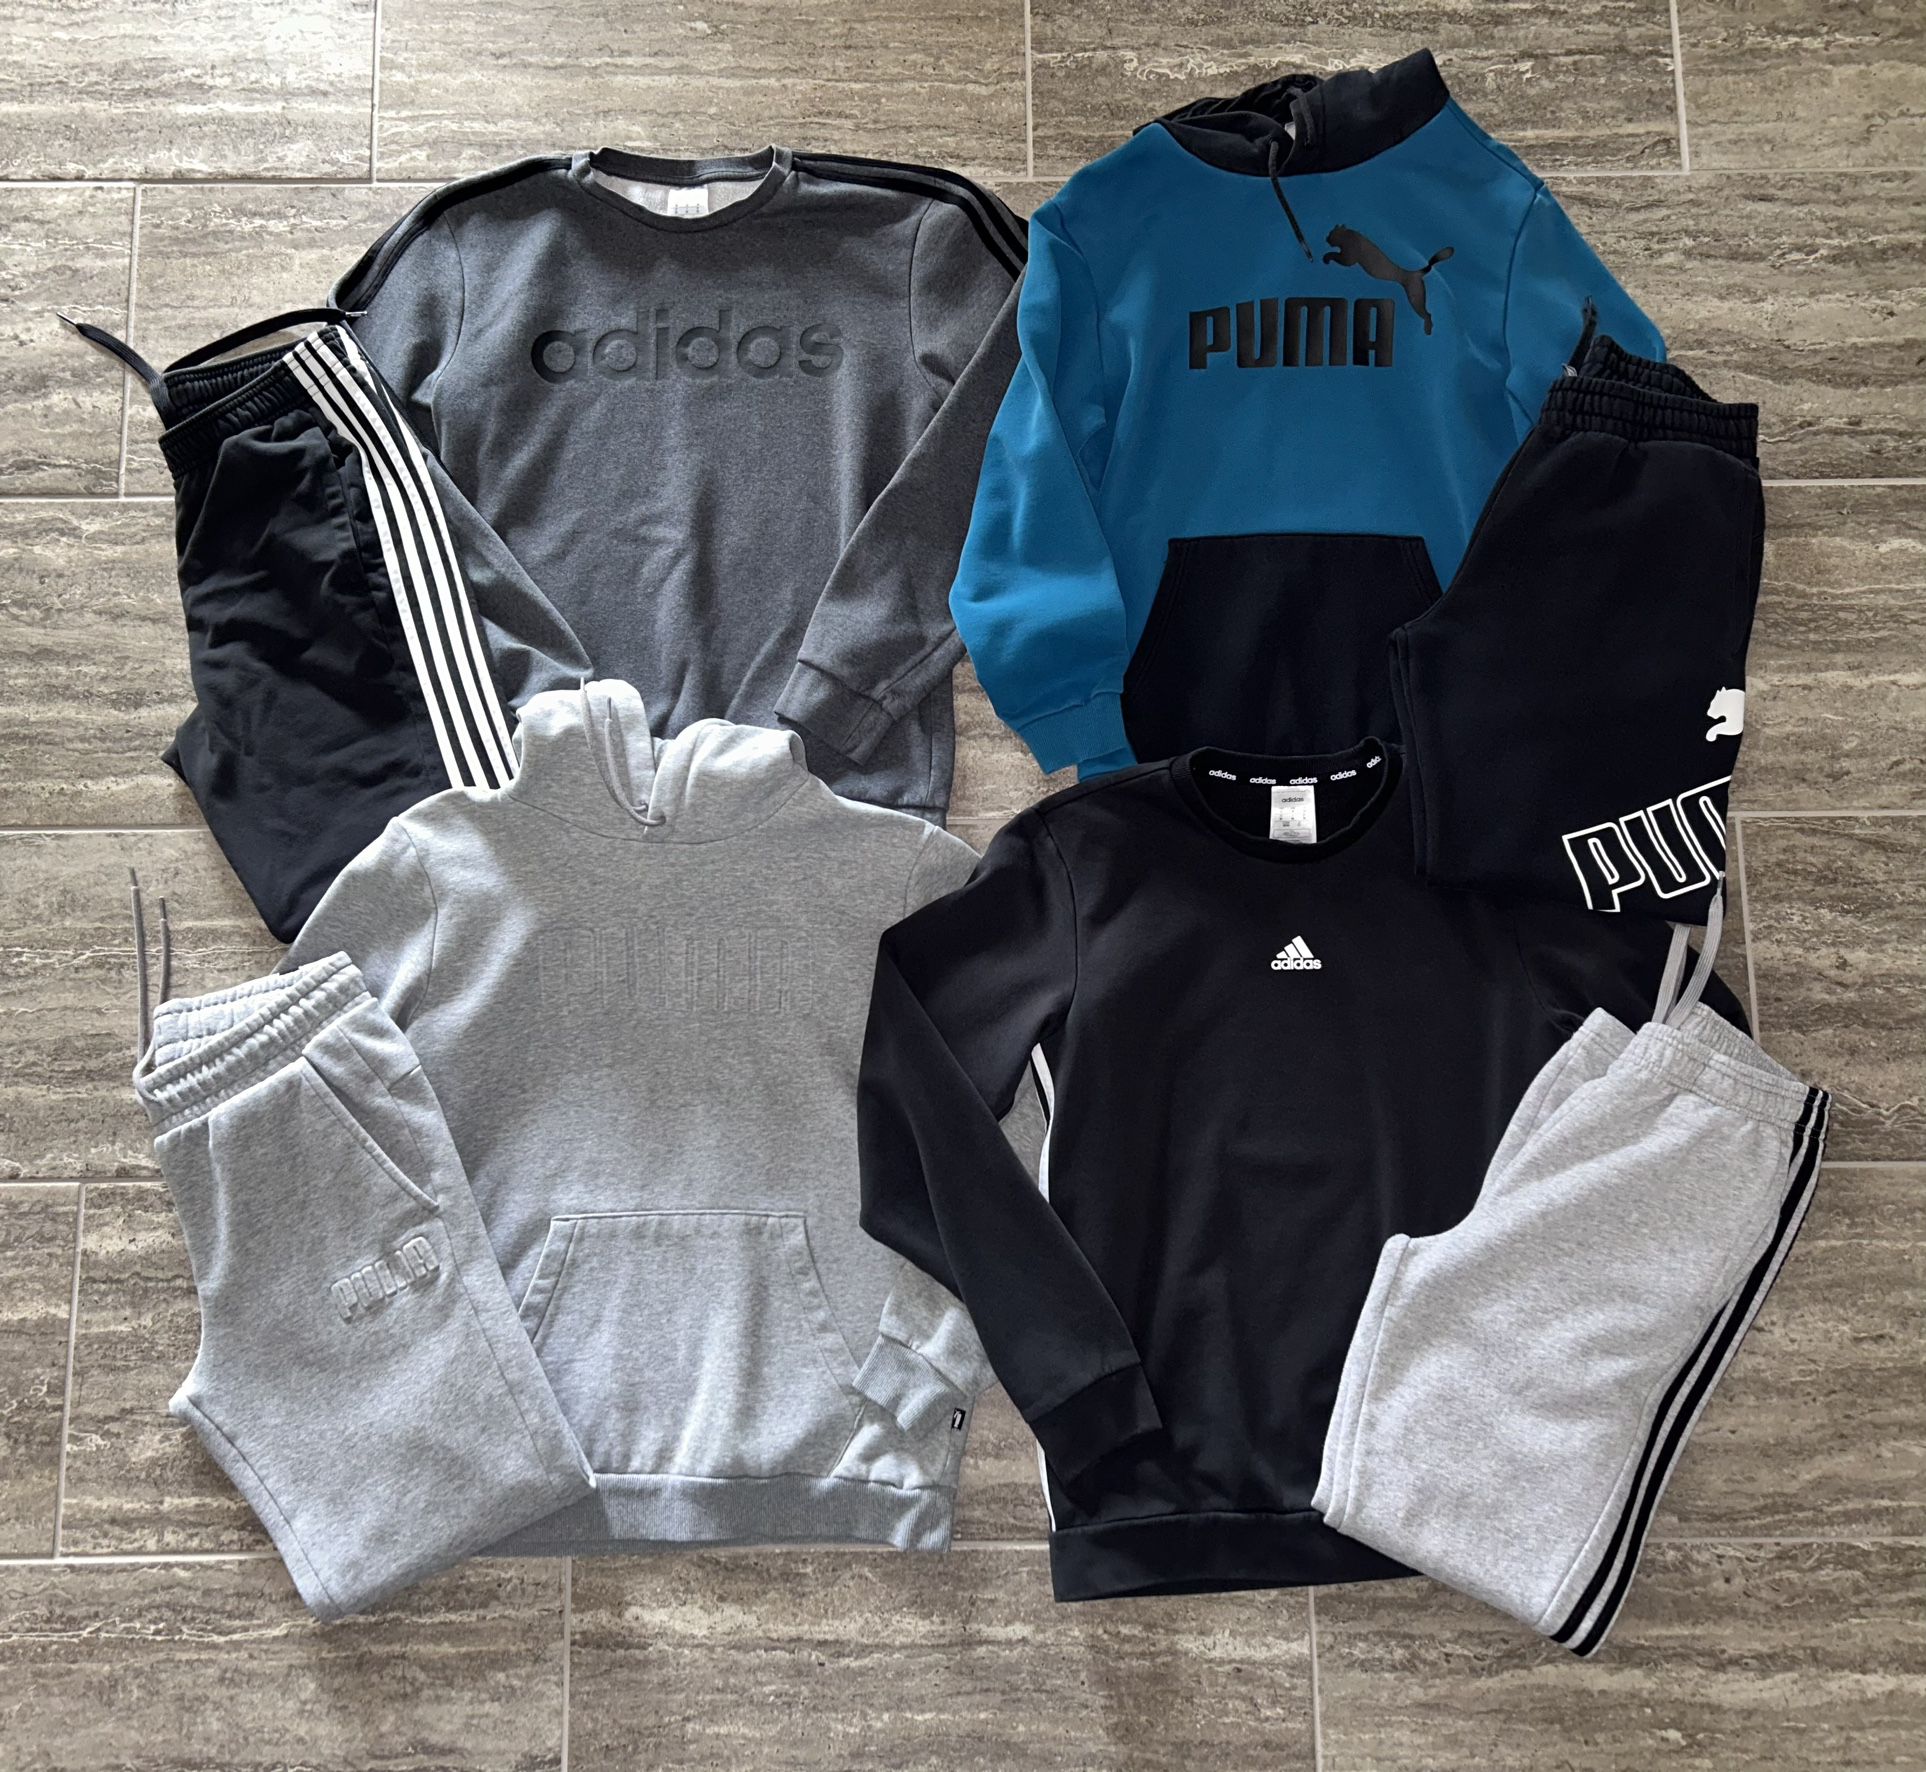 Men’s Adidas & Puma Sets